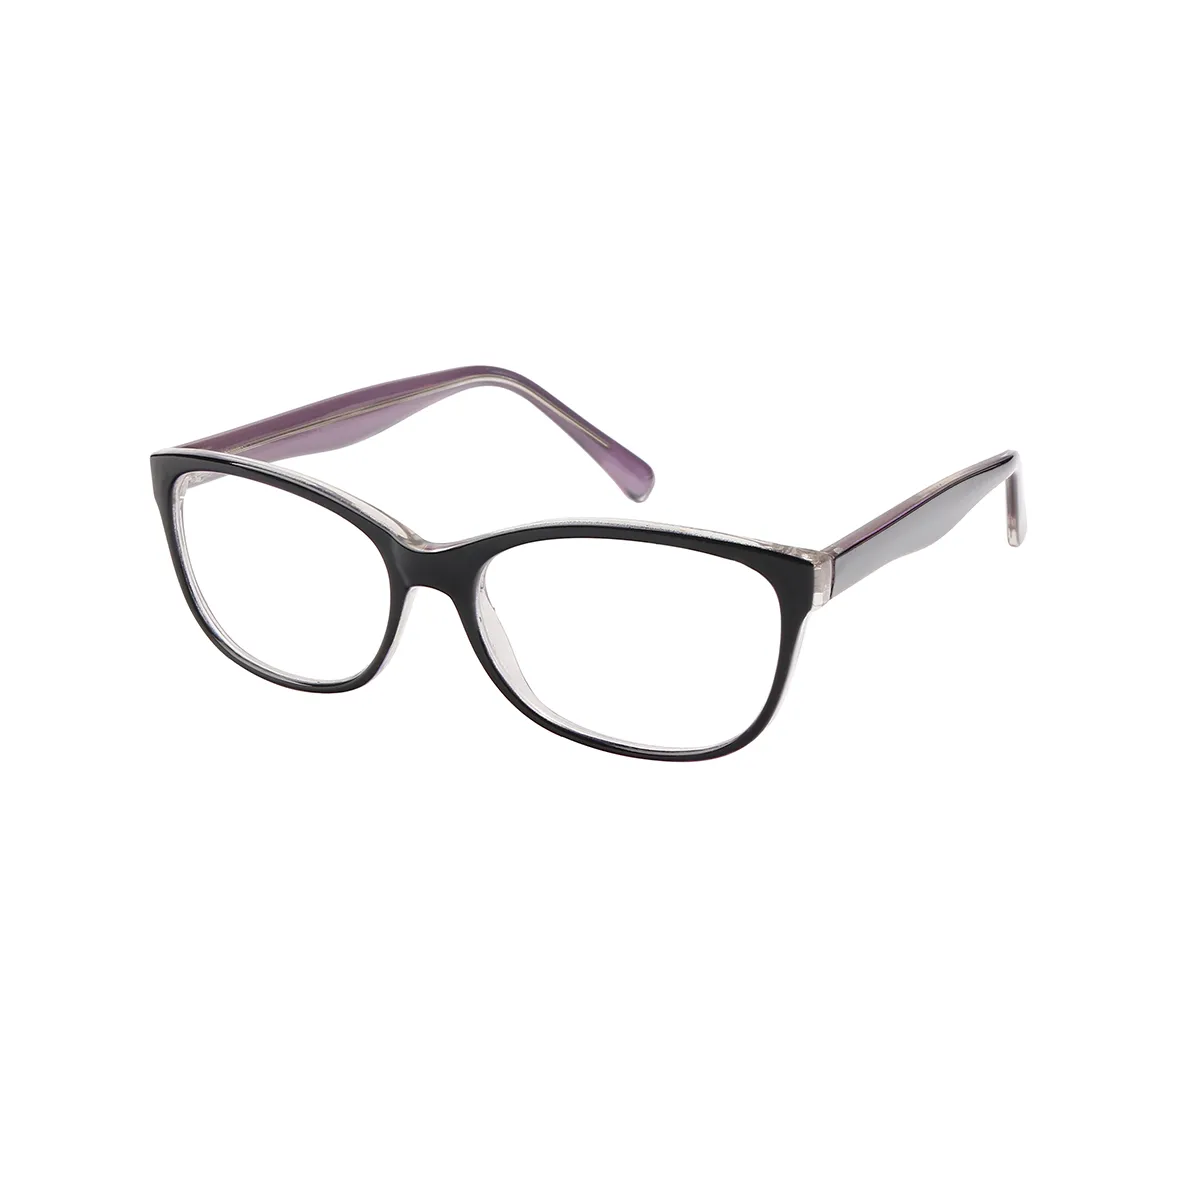 Claribel - Square Black-Purple Glasses for Women